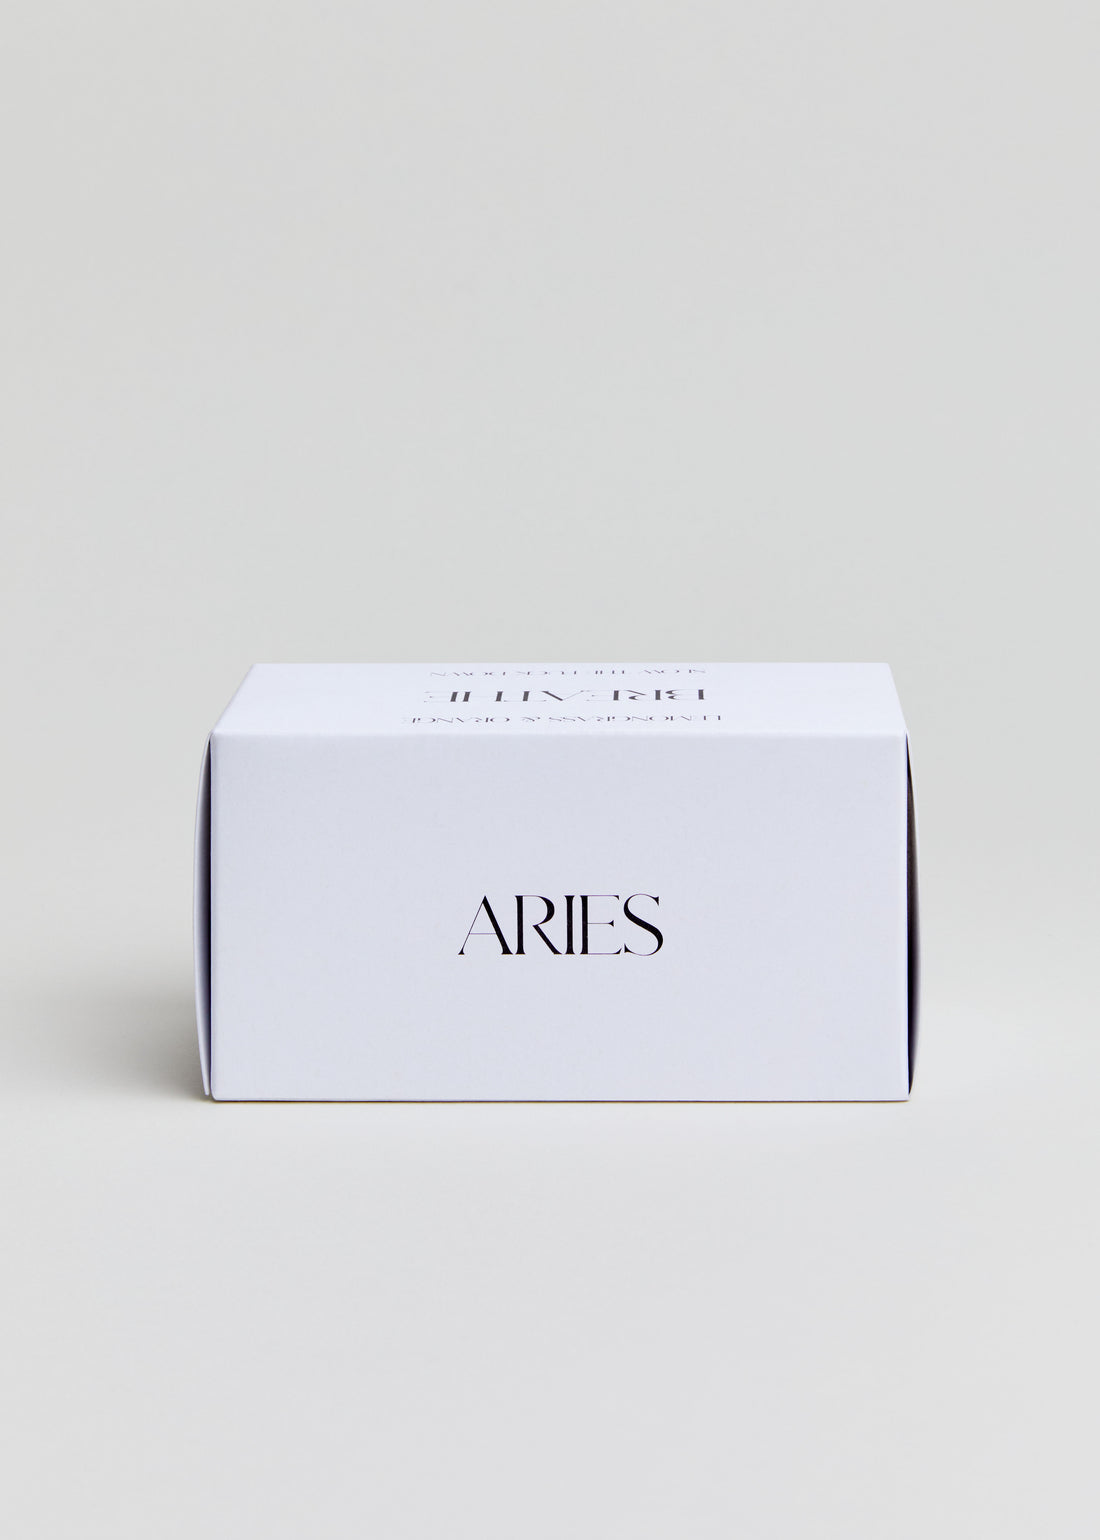 Aries Soap Bar